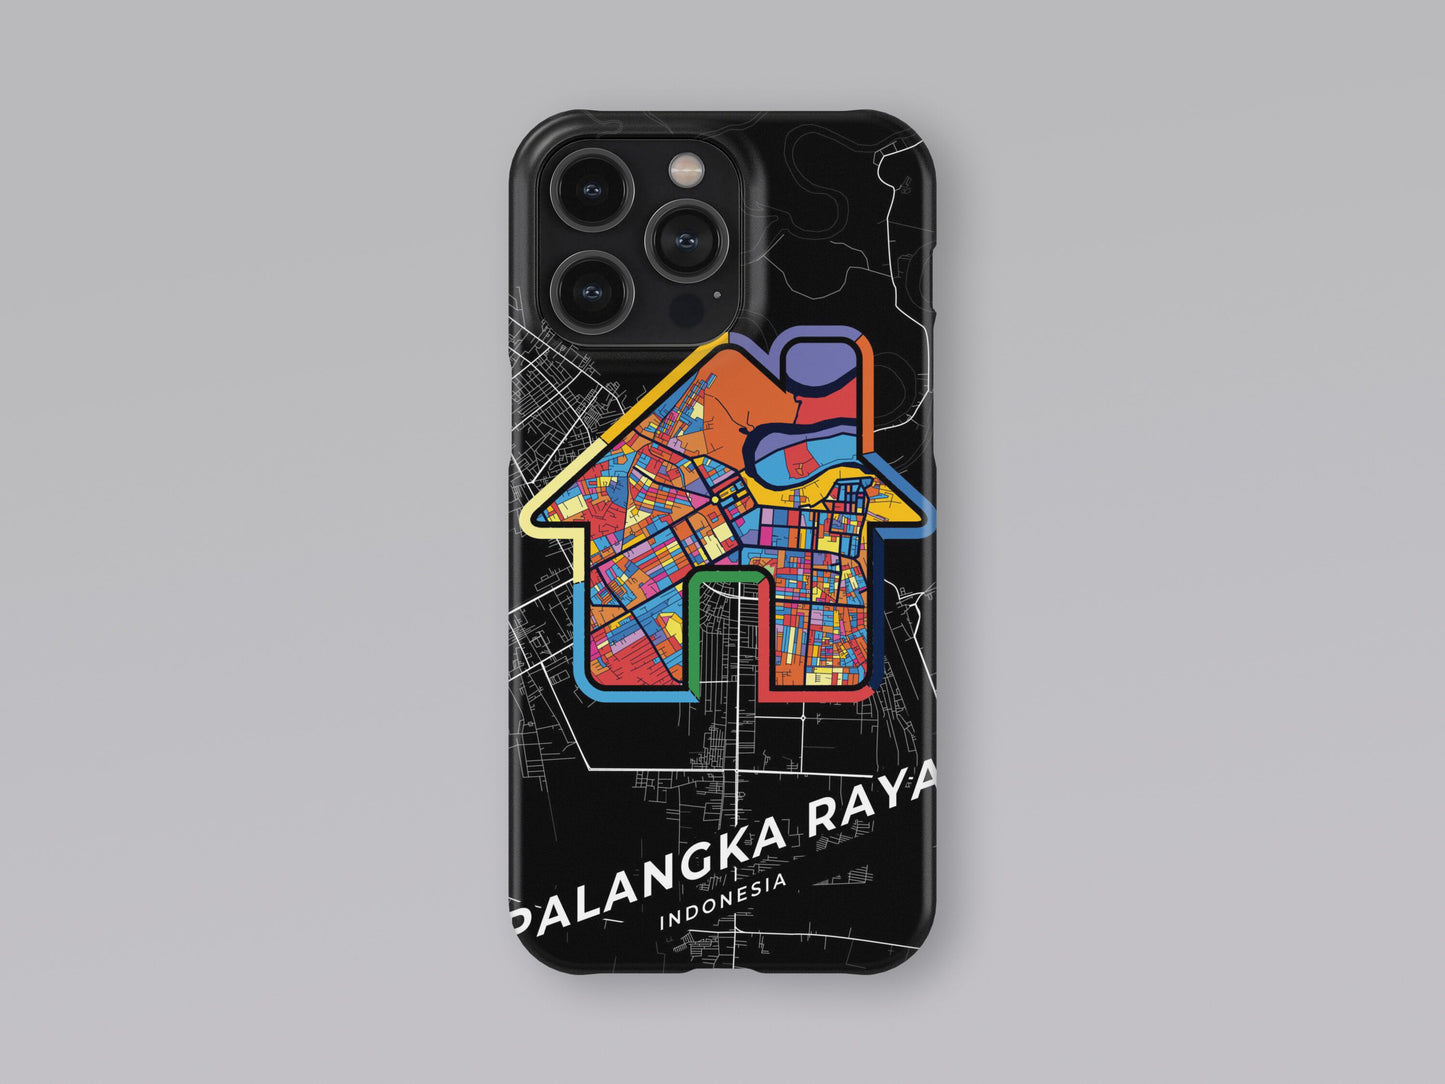 Palangka Raya Indonesia slim phone case with colorful icon 3